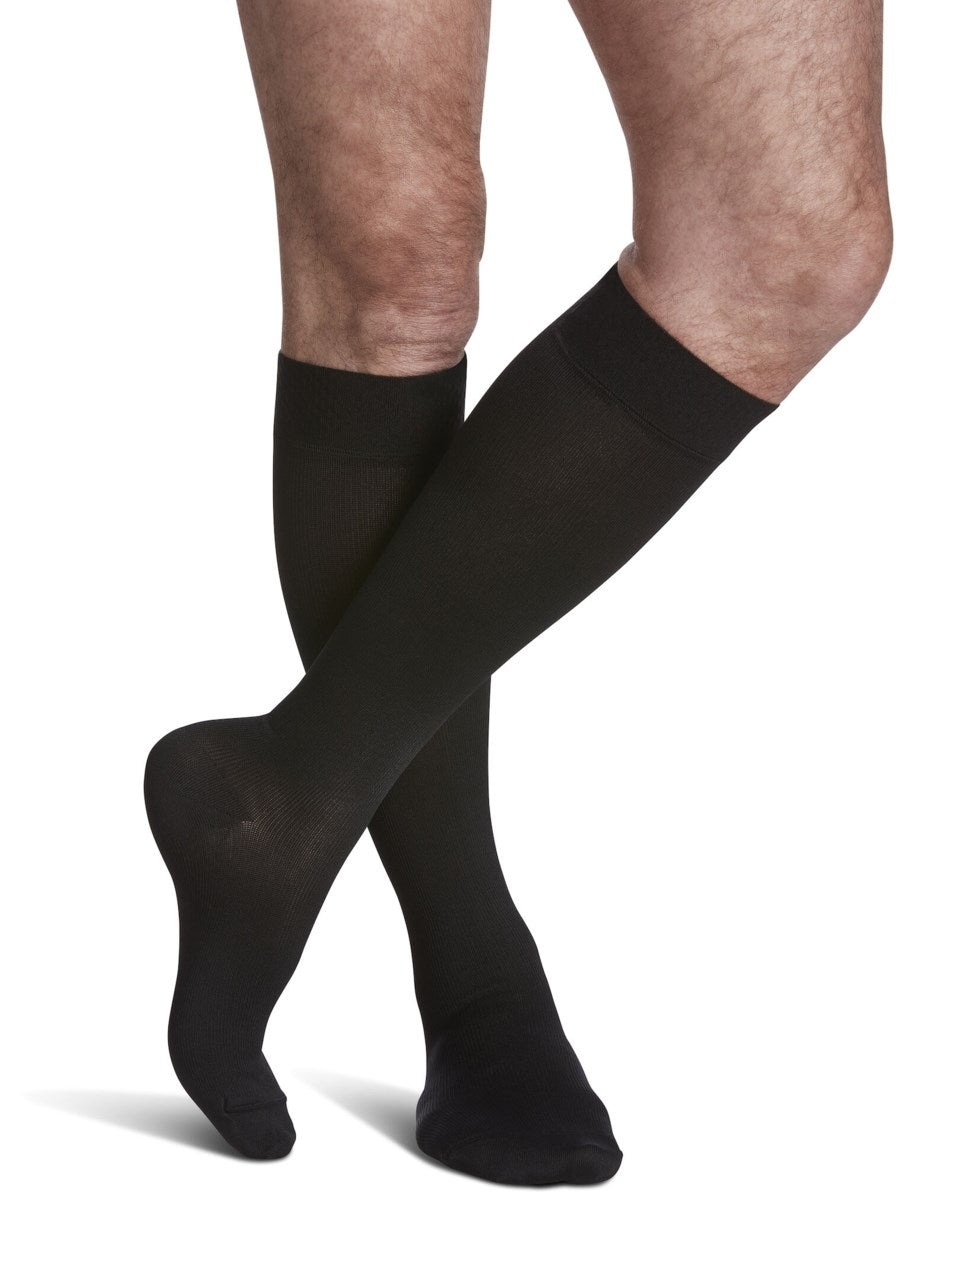 Sigvaris 820 Microfiber Compression Socks 20-30 mmHg Calf High for Men Closed Toe